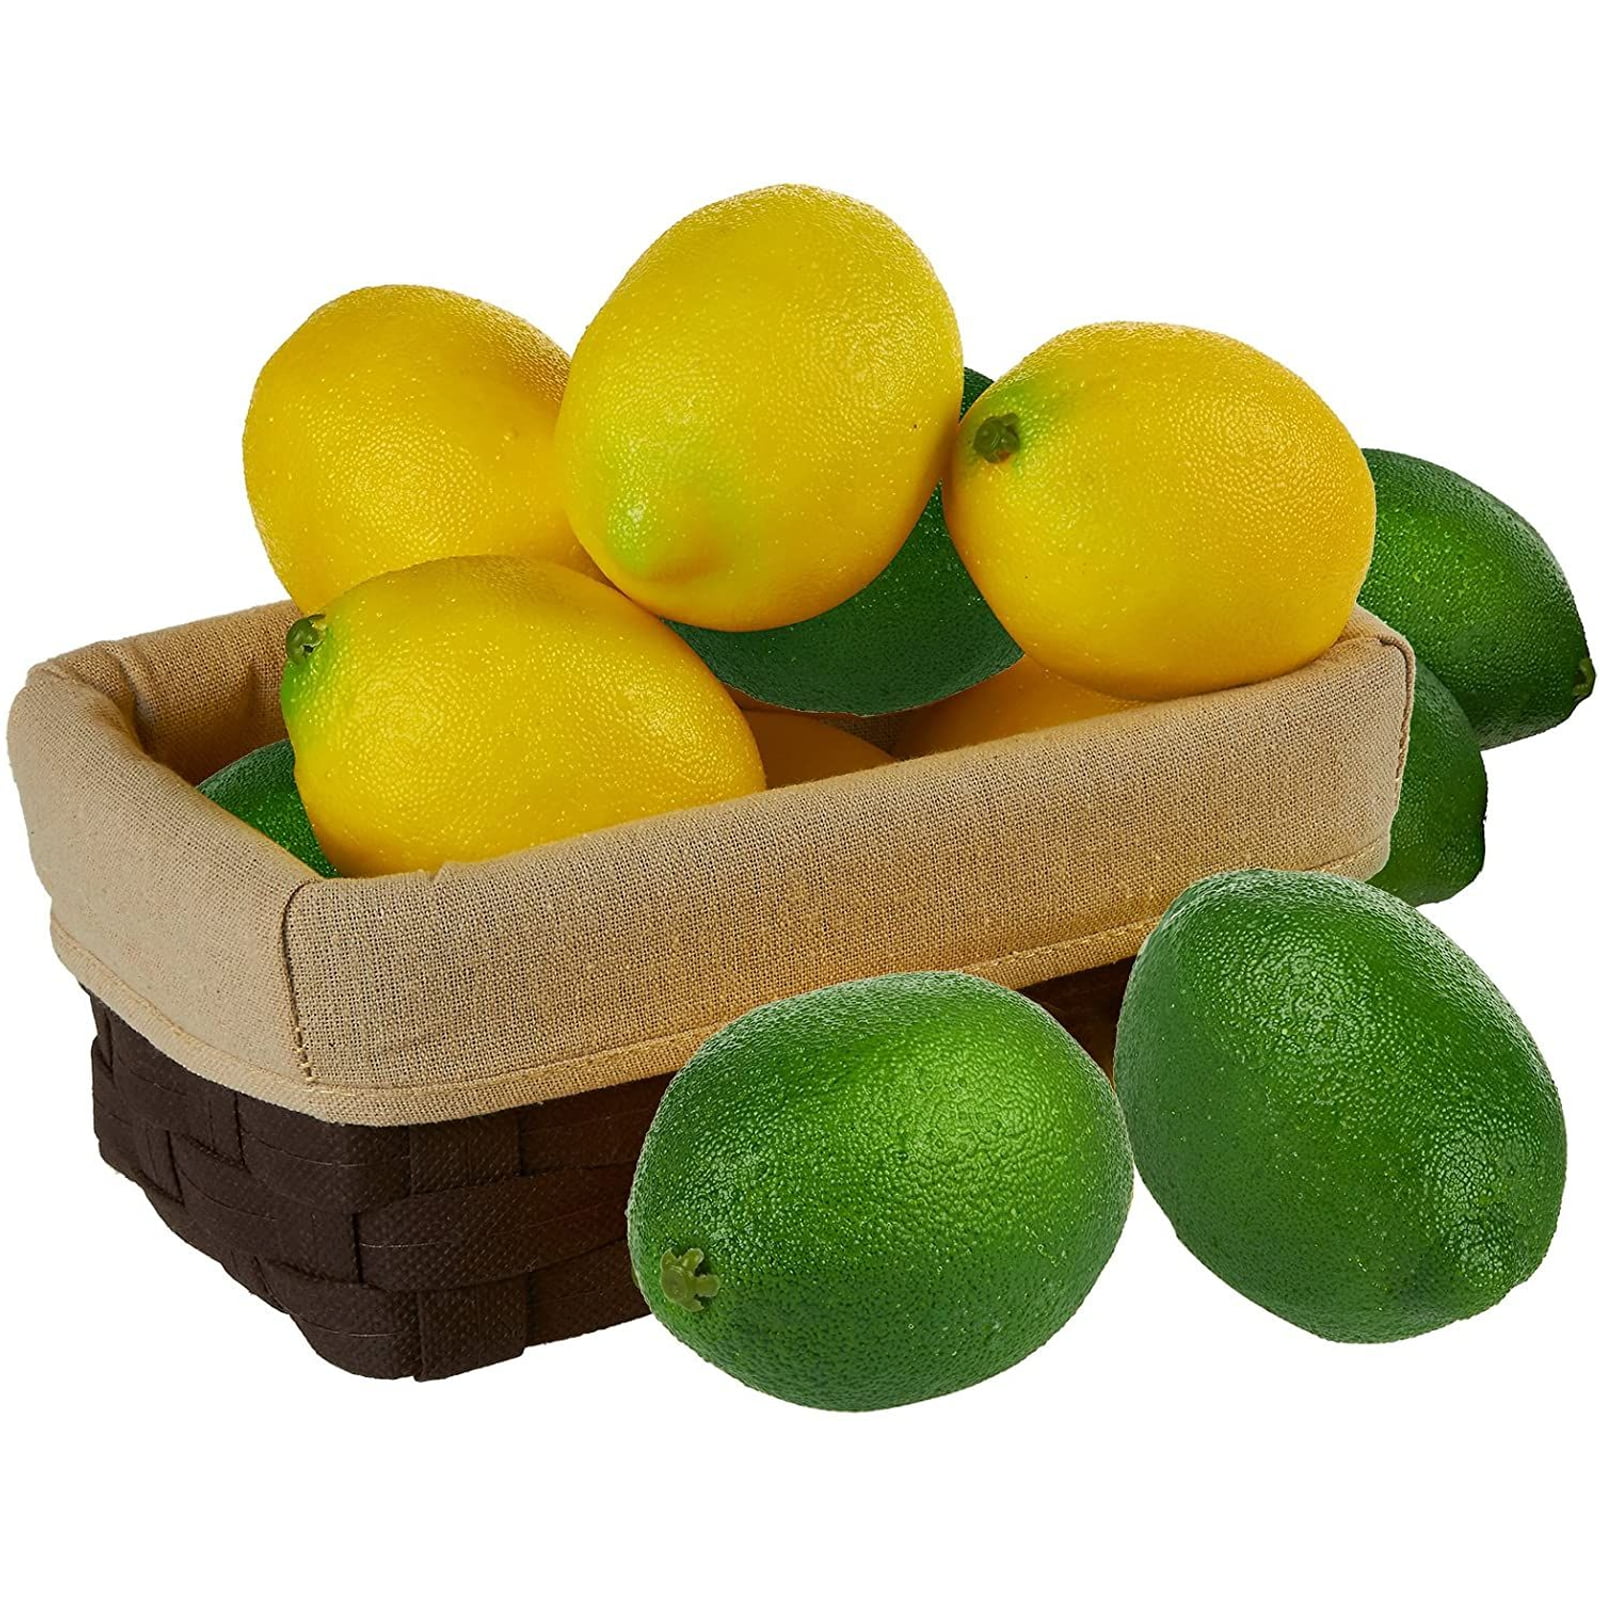 6x Realistic Lifelike Artificial Plastic Lime Lemon Fruit Fake Home Decor N2P7 